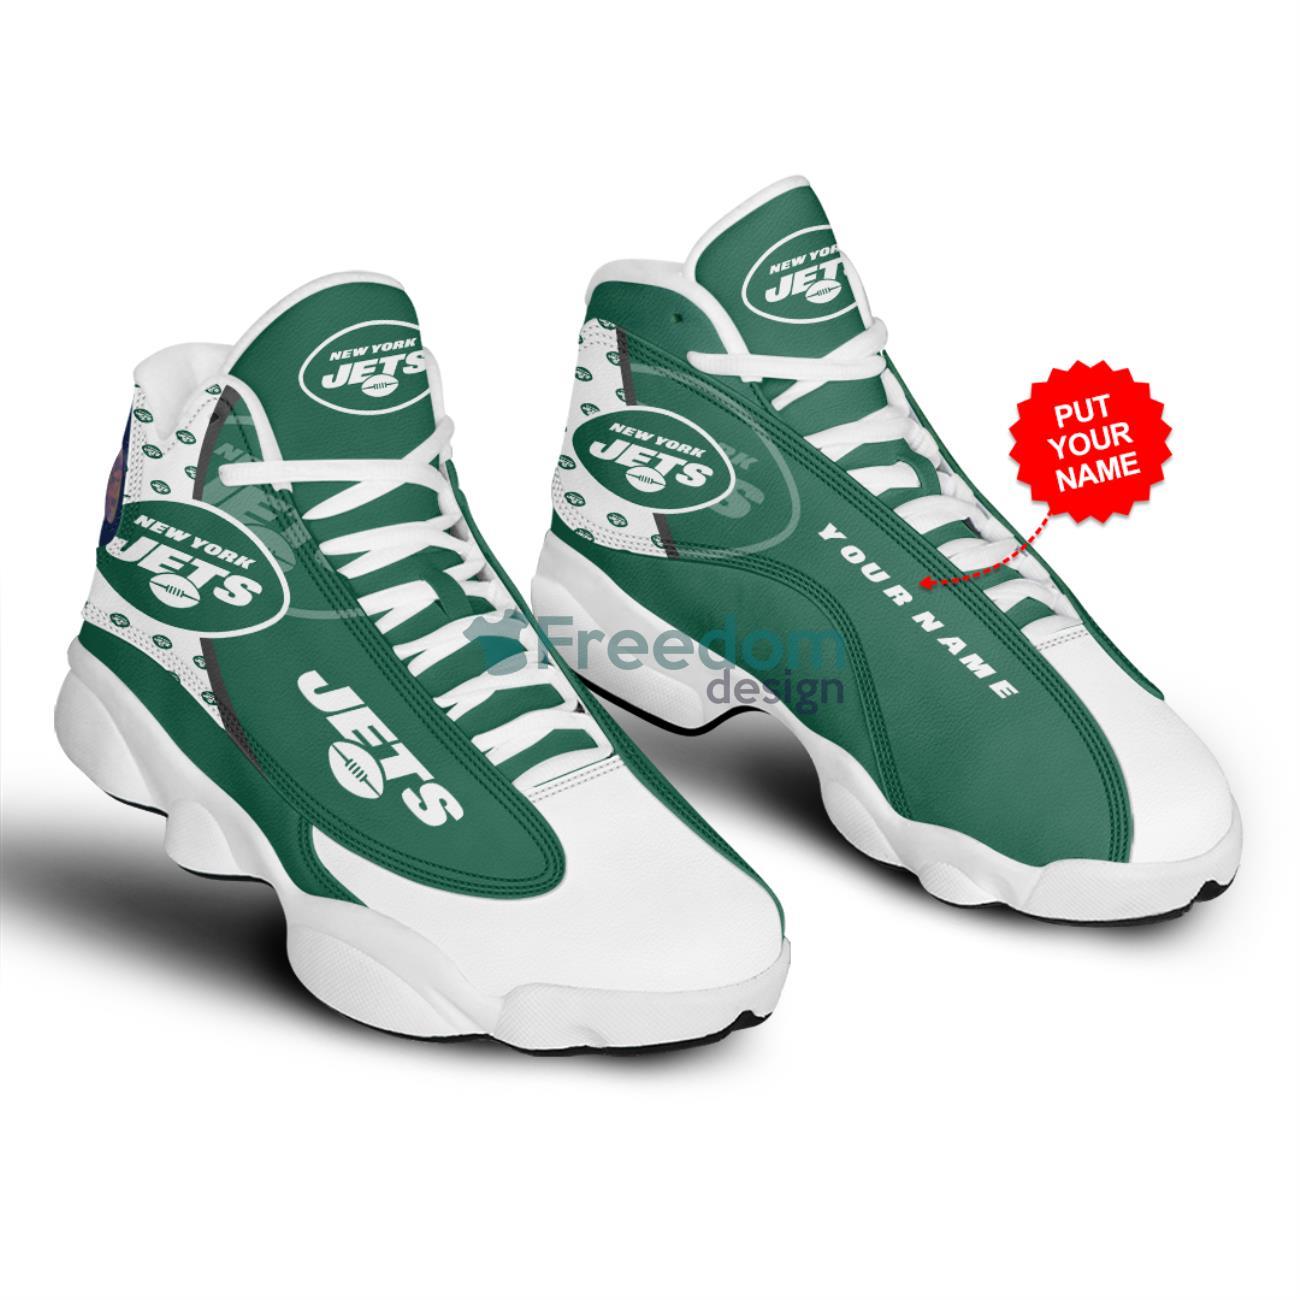 New York Jets Team Green Air Jordan 13 Shoes For Fans